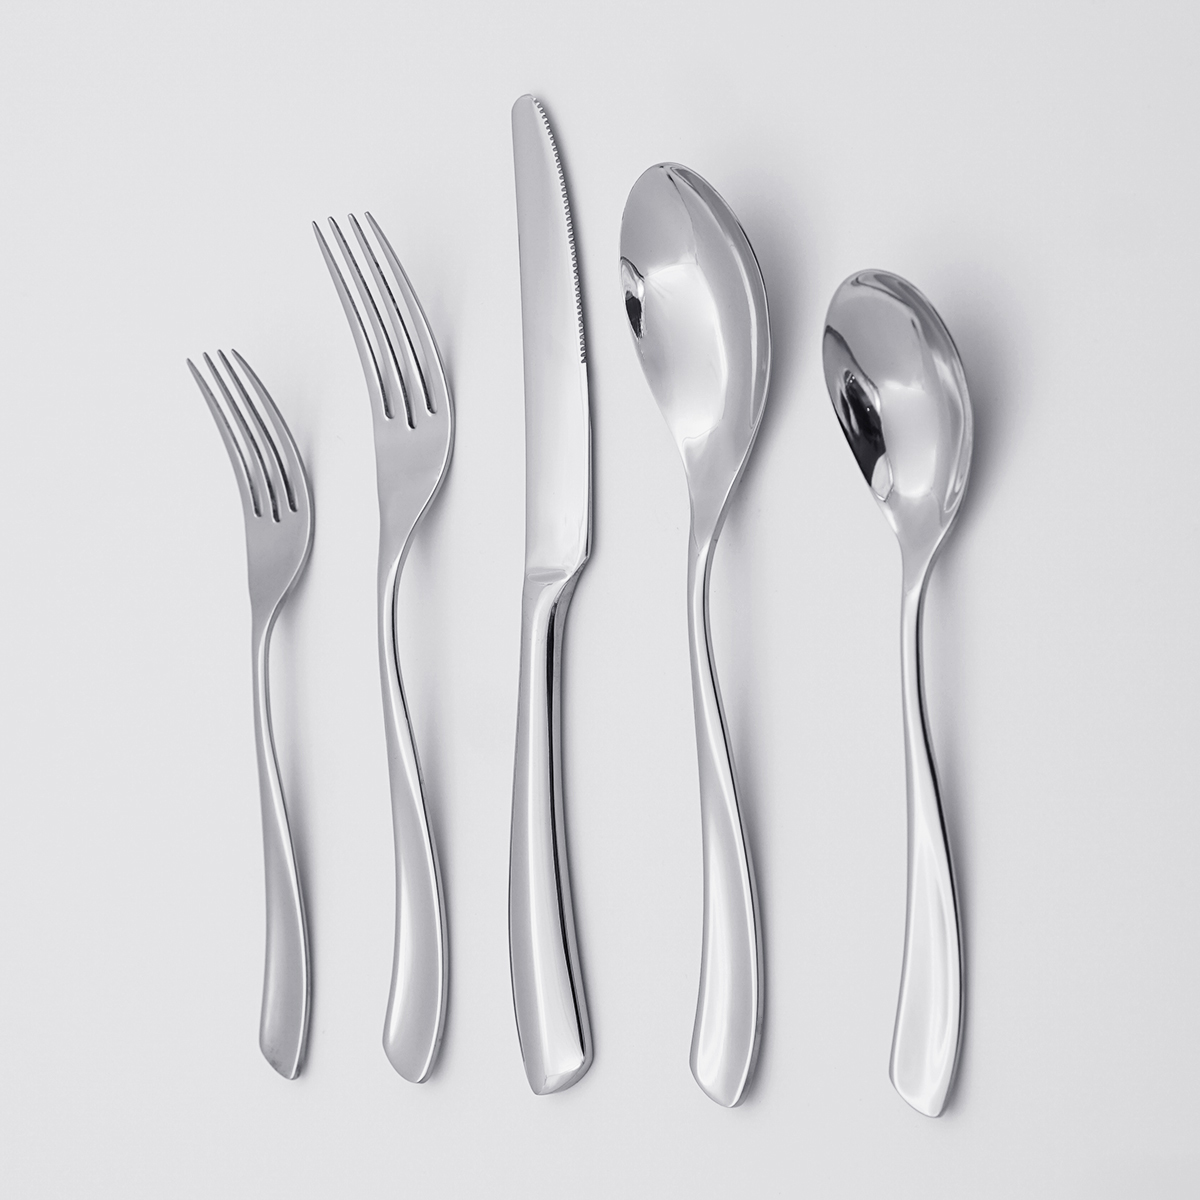 Unique Design Creative Cutlery 304 Stainless Steel Silverware Flatware Sets for Restaurant